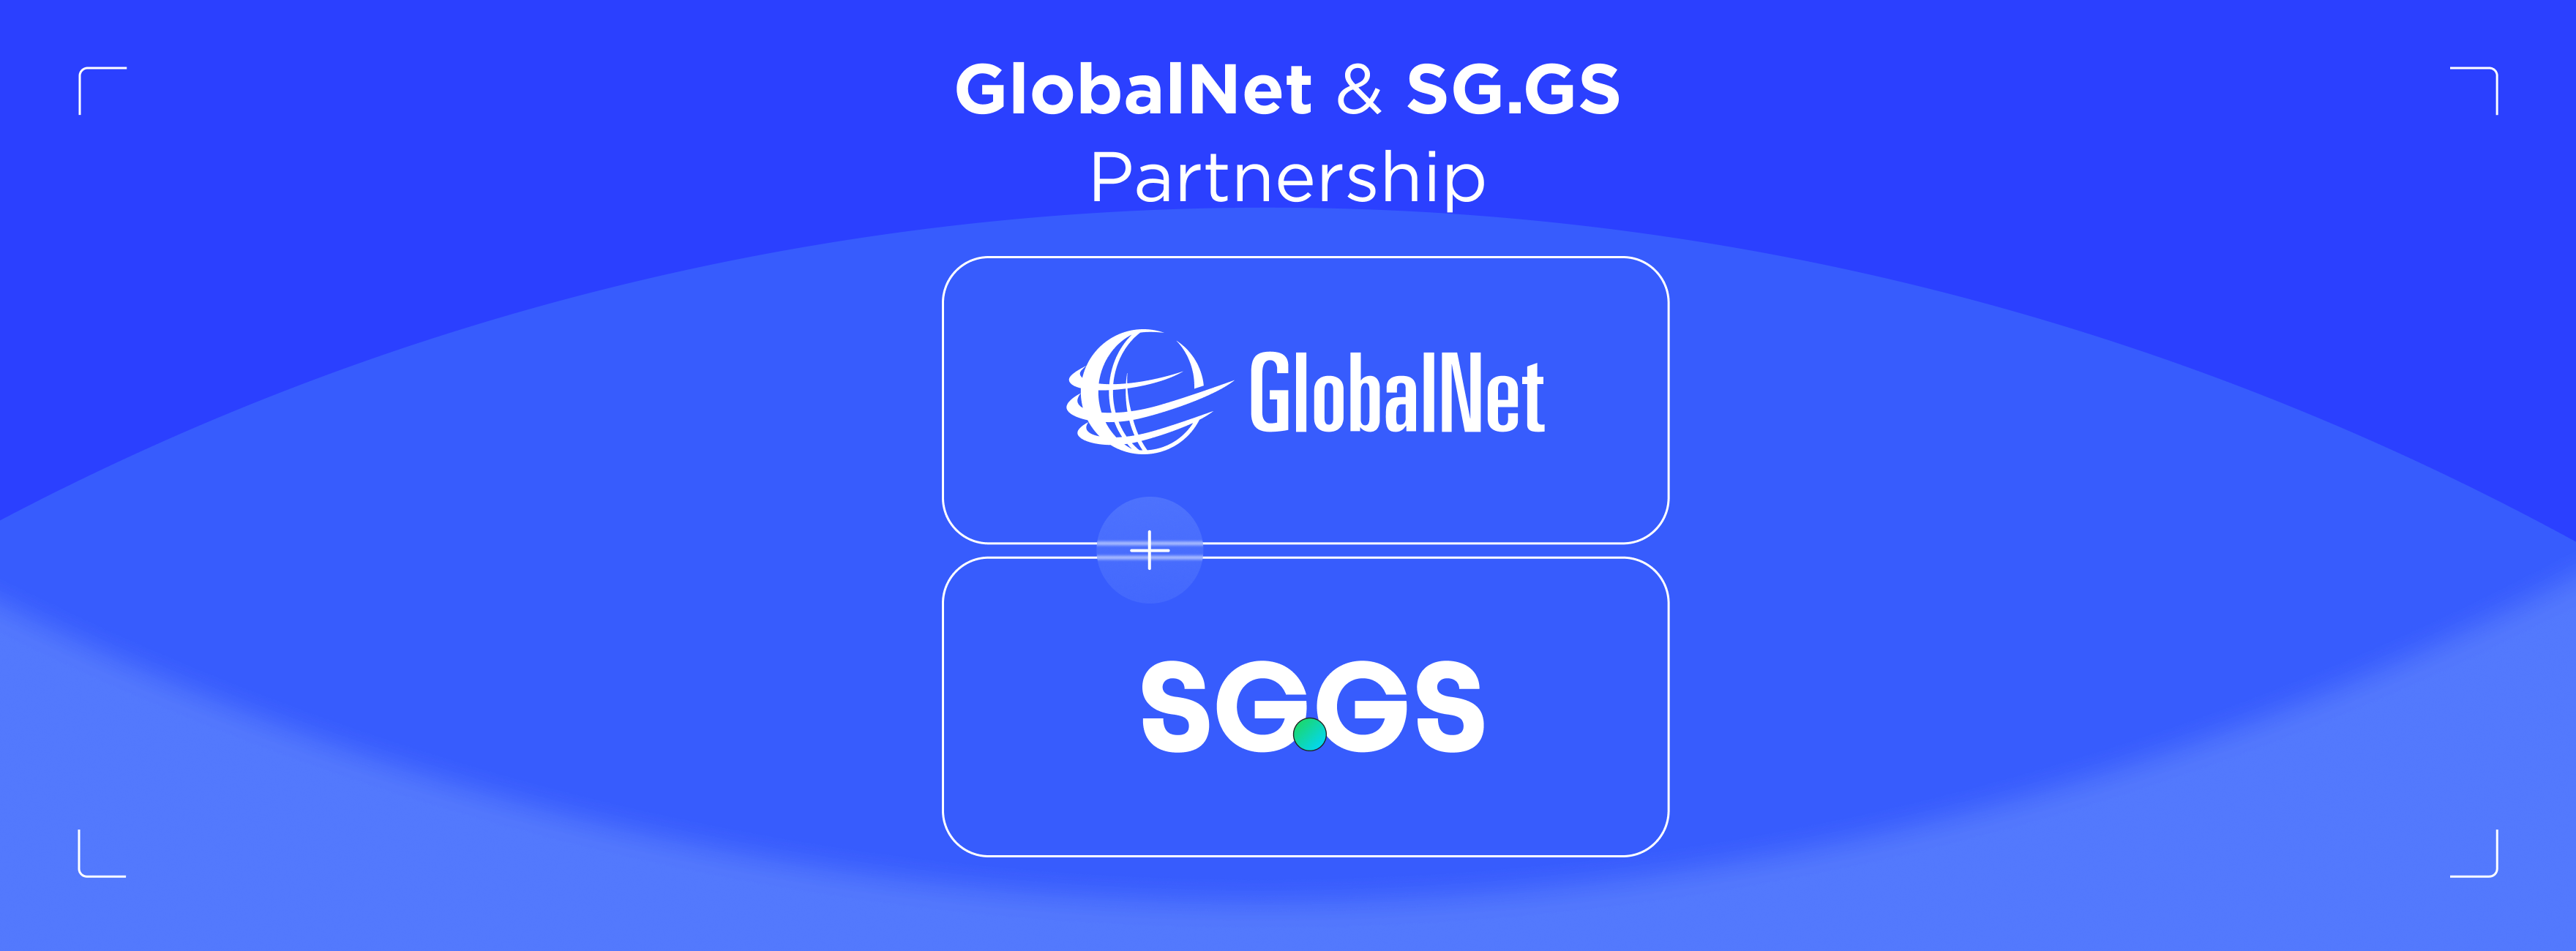 GlobalNet and SG.GS Announce Partnership